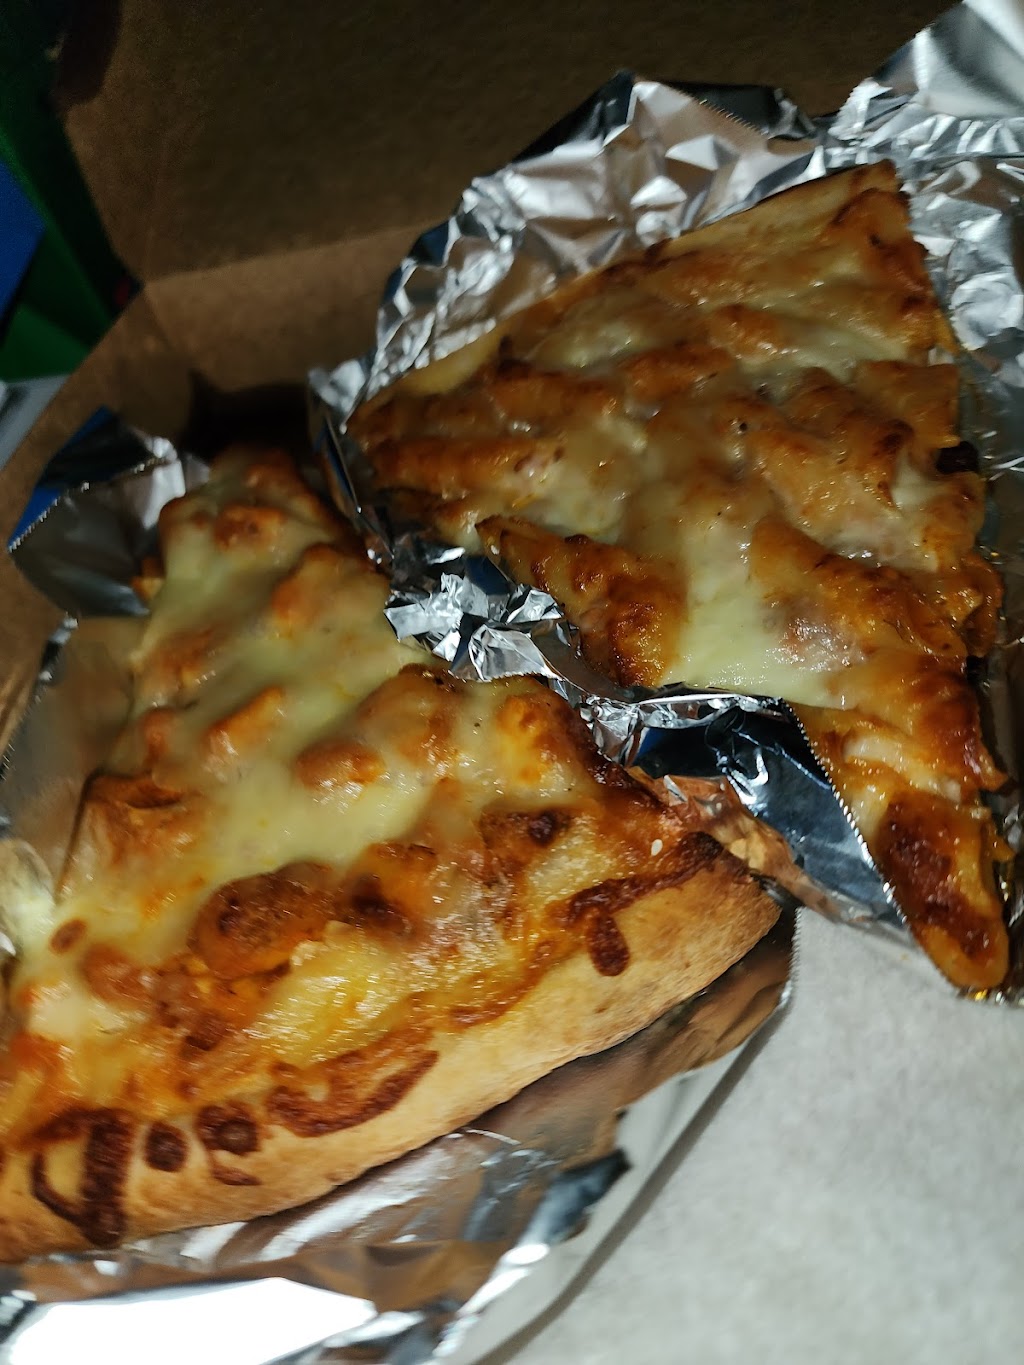 Carlos Pizza Oven of Holbrook | 480 Patchogue-Holbrook Rd #23, Holbrook, NY 11741 | Phone: (631) 589-7777